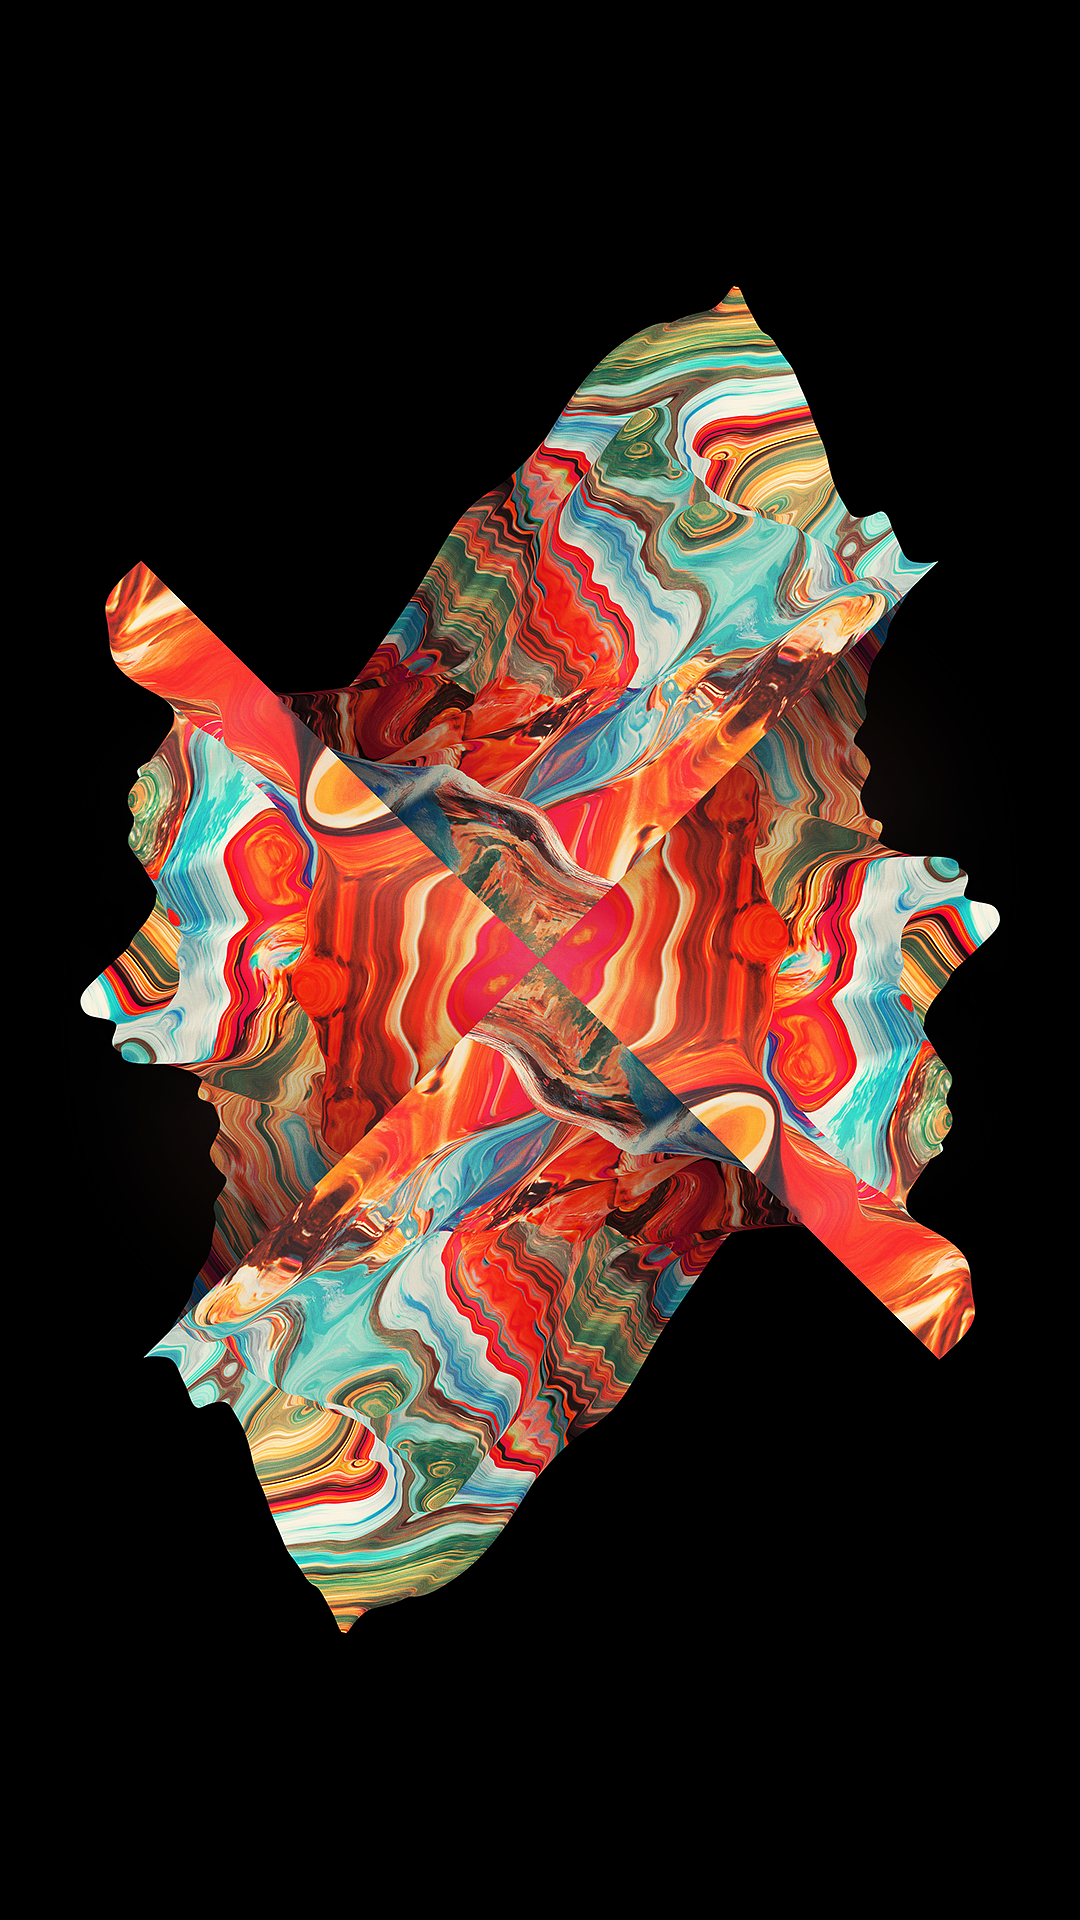 oneplus x wallpaper,orange,product,textile,scarf,illustration